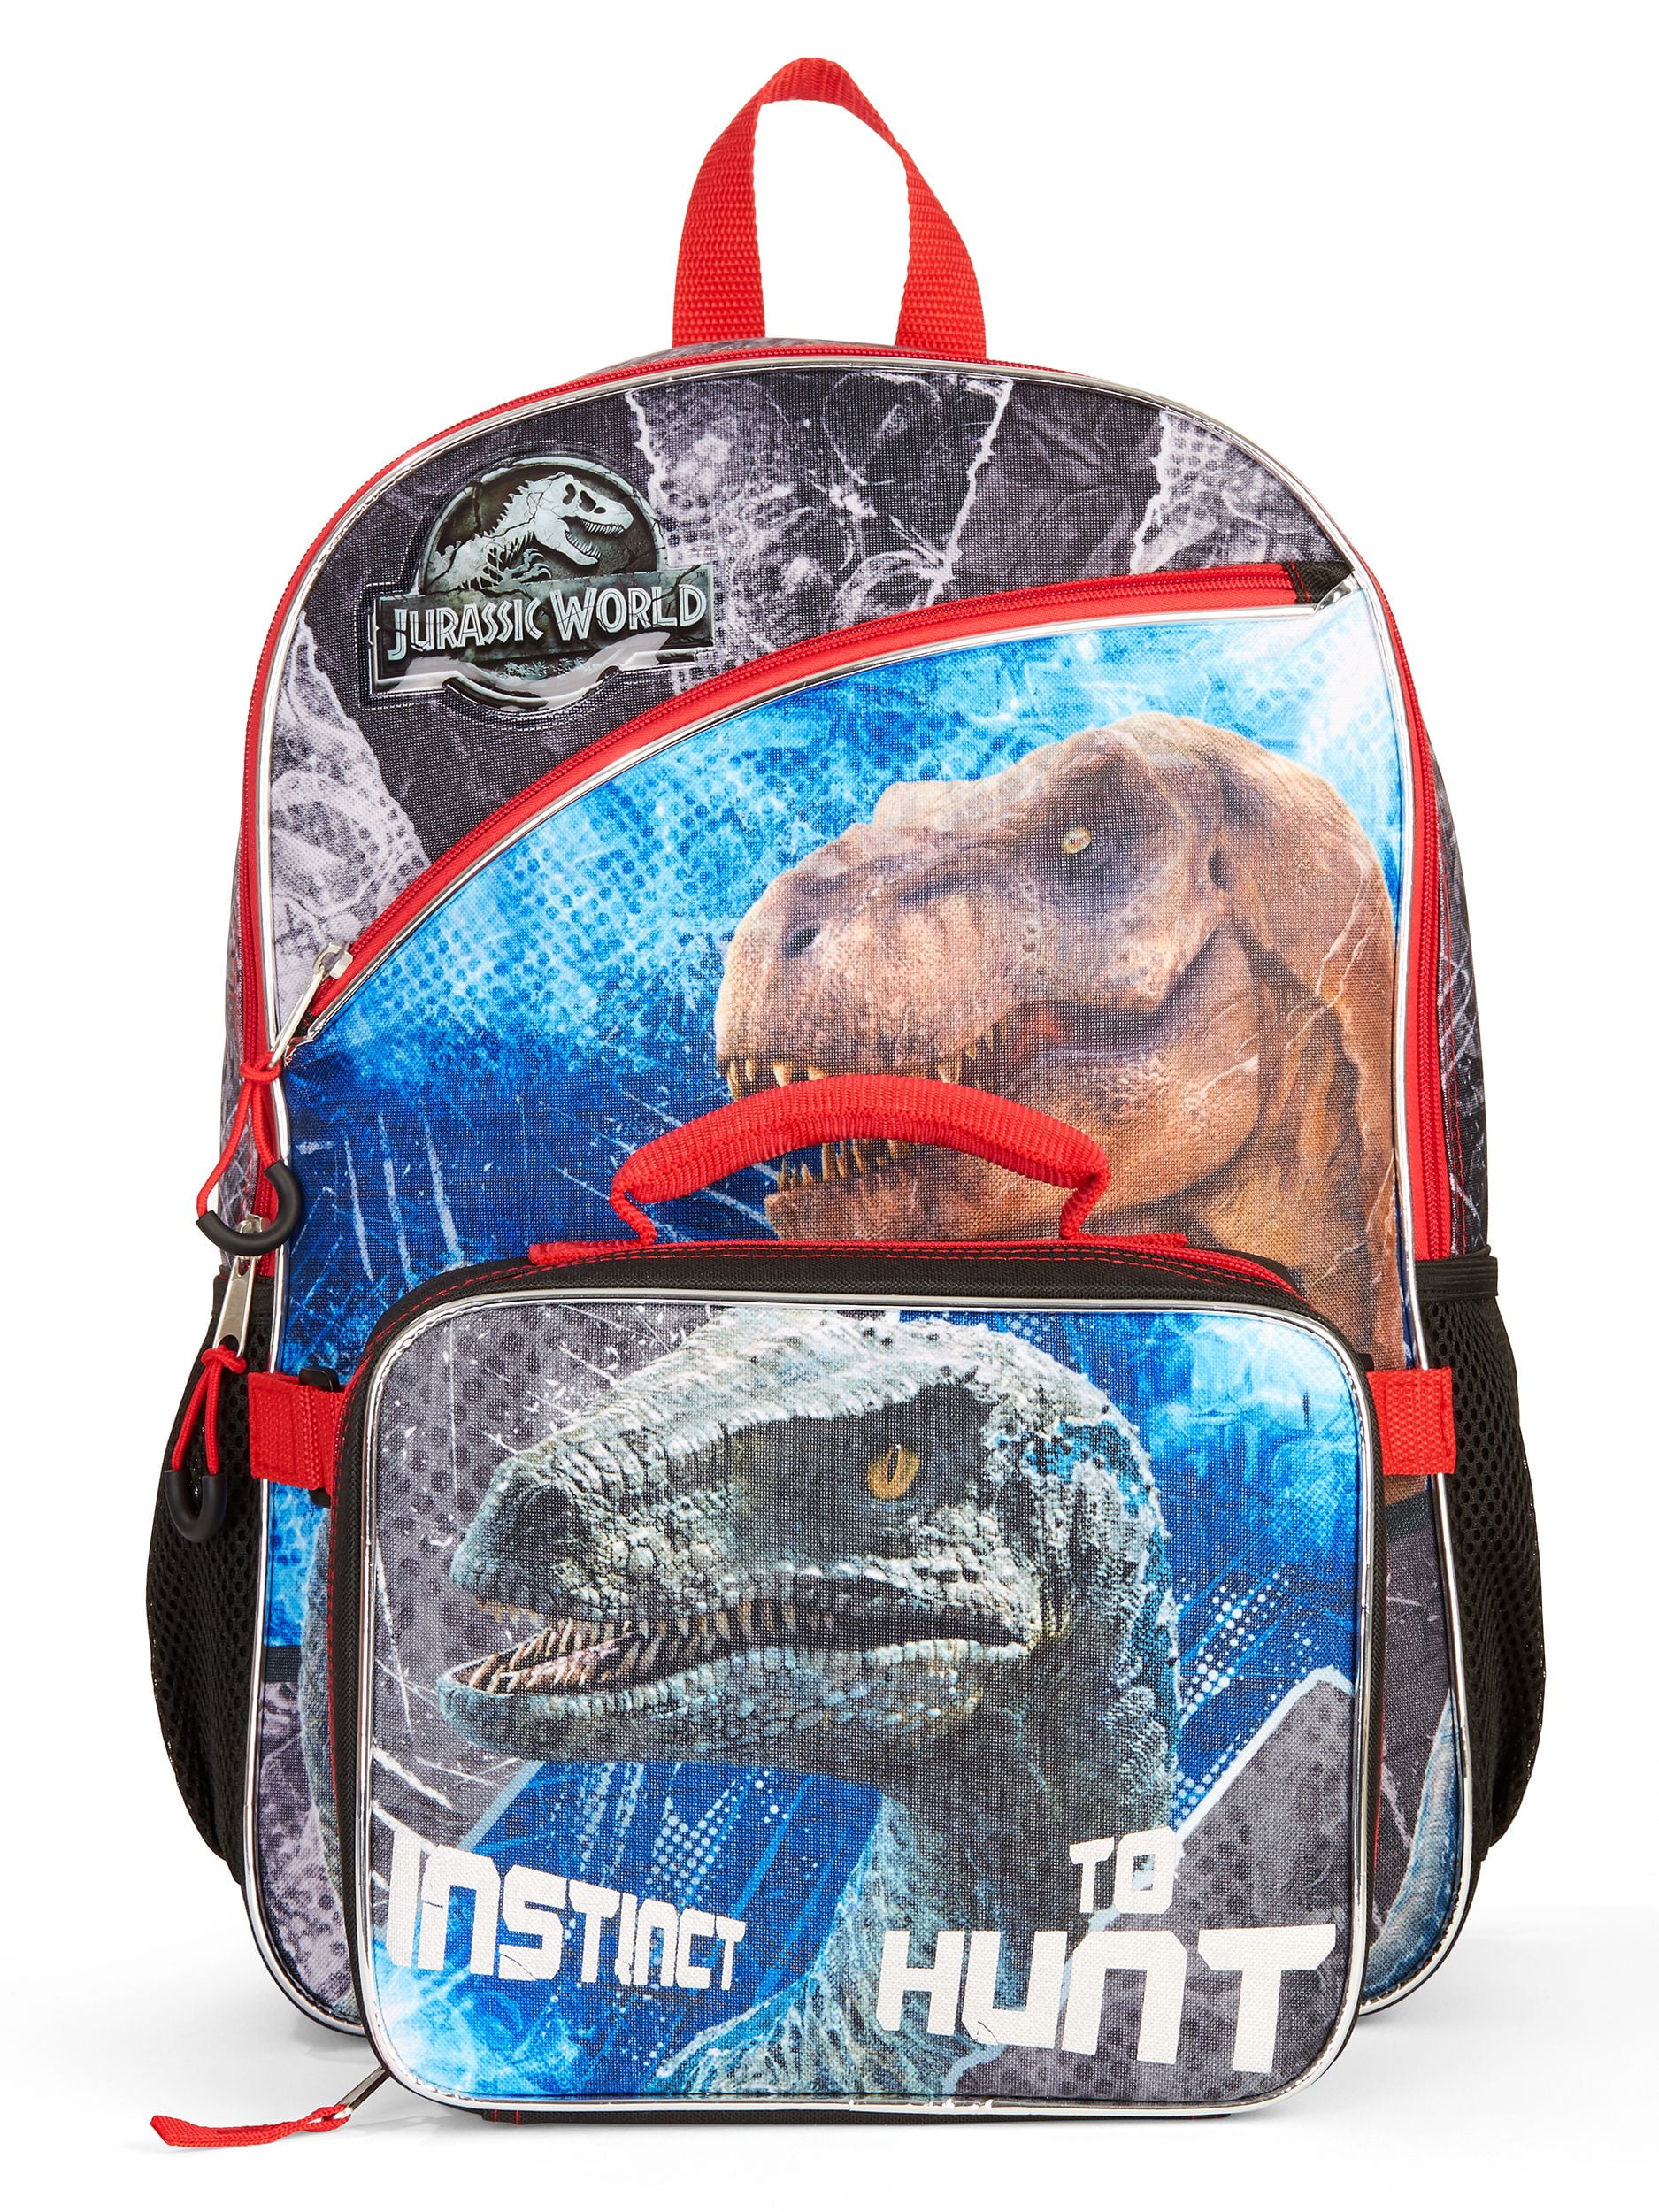 Jurassic World Kids Backpack Dinosaur Schoolbag Insulated Lunch Bag Pen Case Lot 